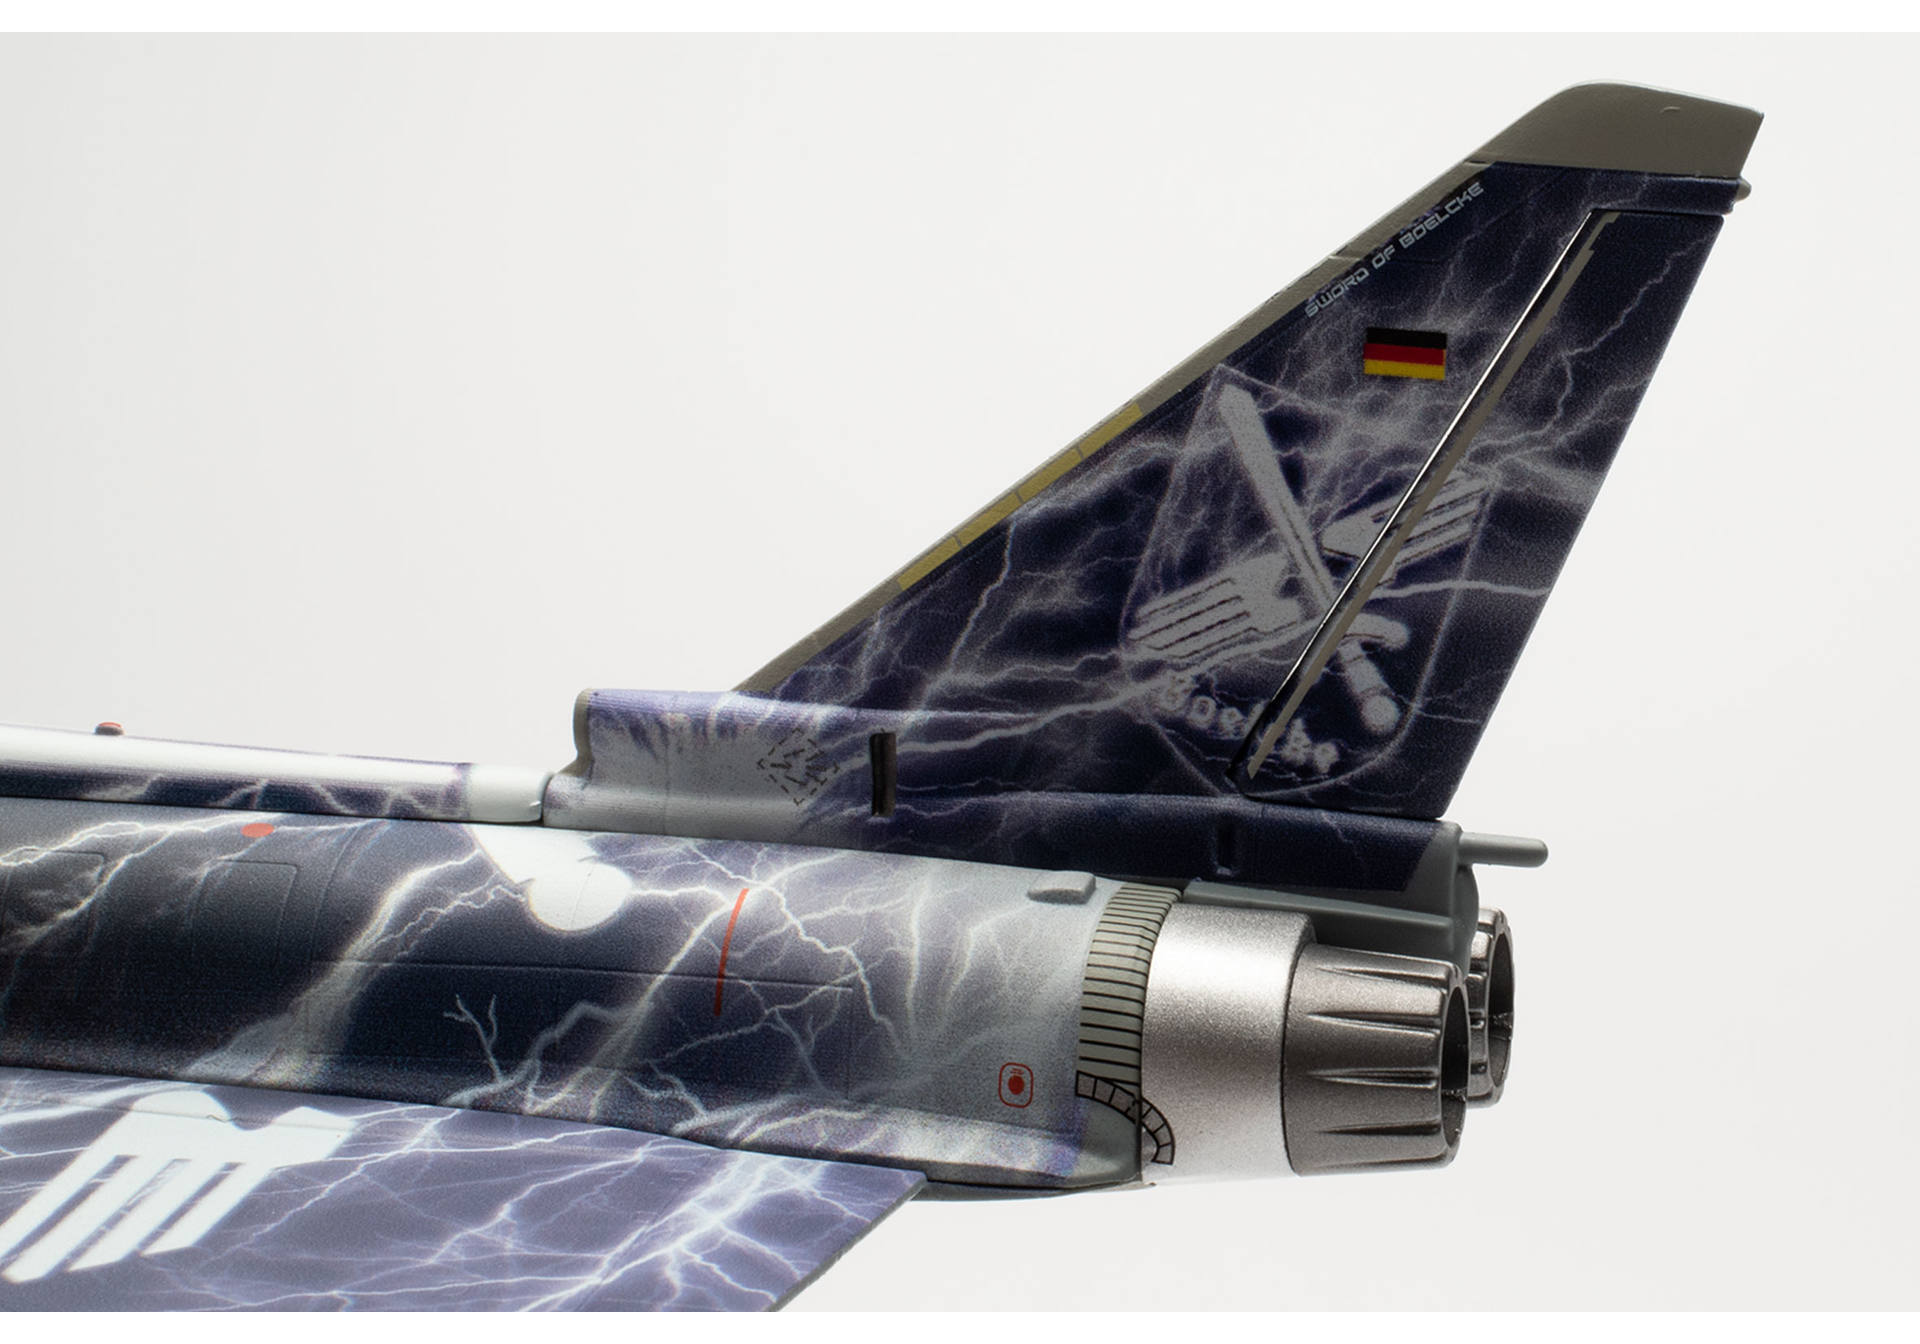 Luftwaffe Eurofighter Typhoon - TaktLwG 31 (Tactical Wing 31), Nörvenich Air Base “Sword of Boelcke” – 3096